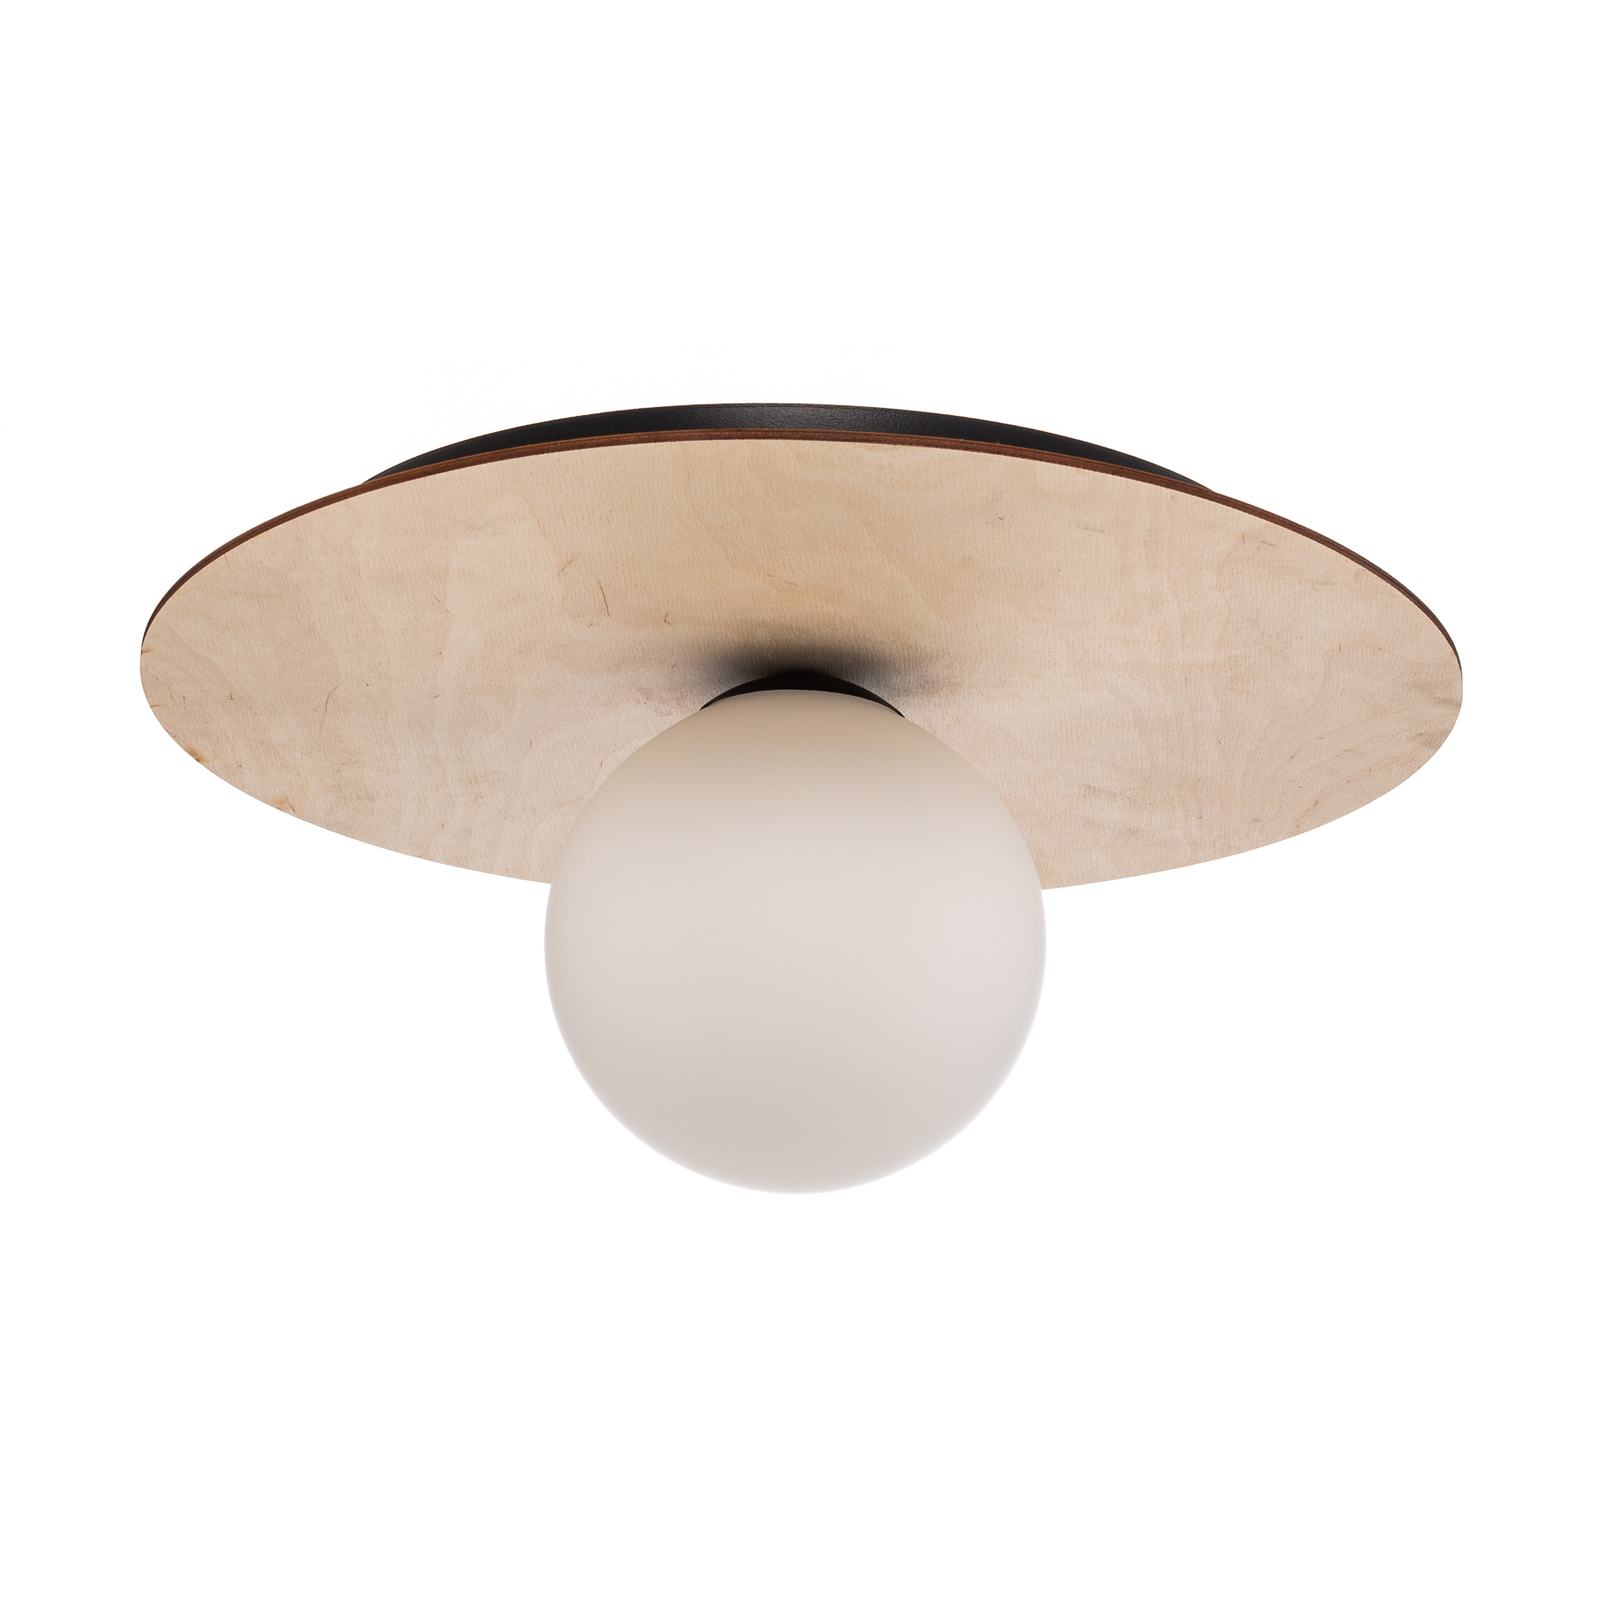 Kenzo loftlampe, rund, brun/hvid, 1 lyskilder